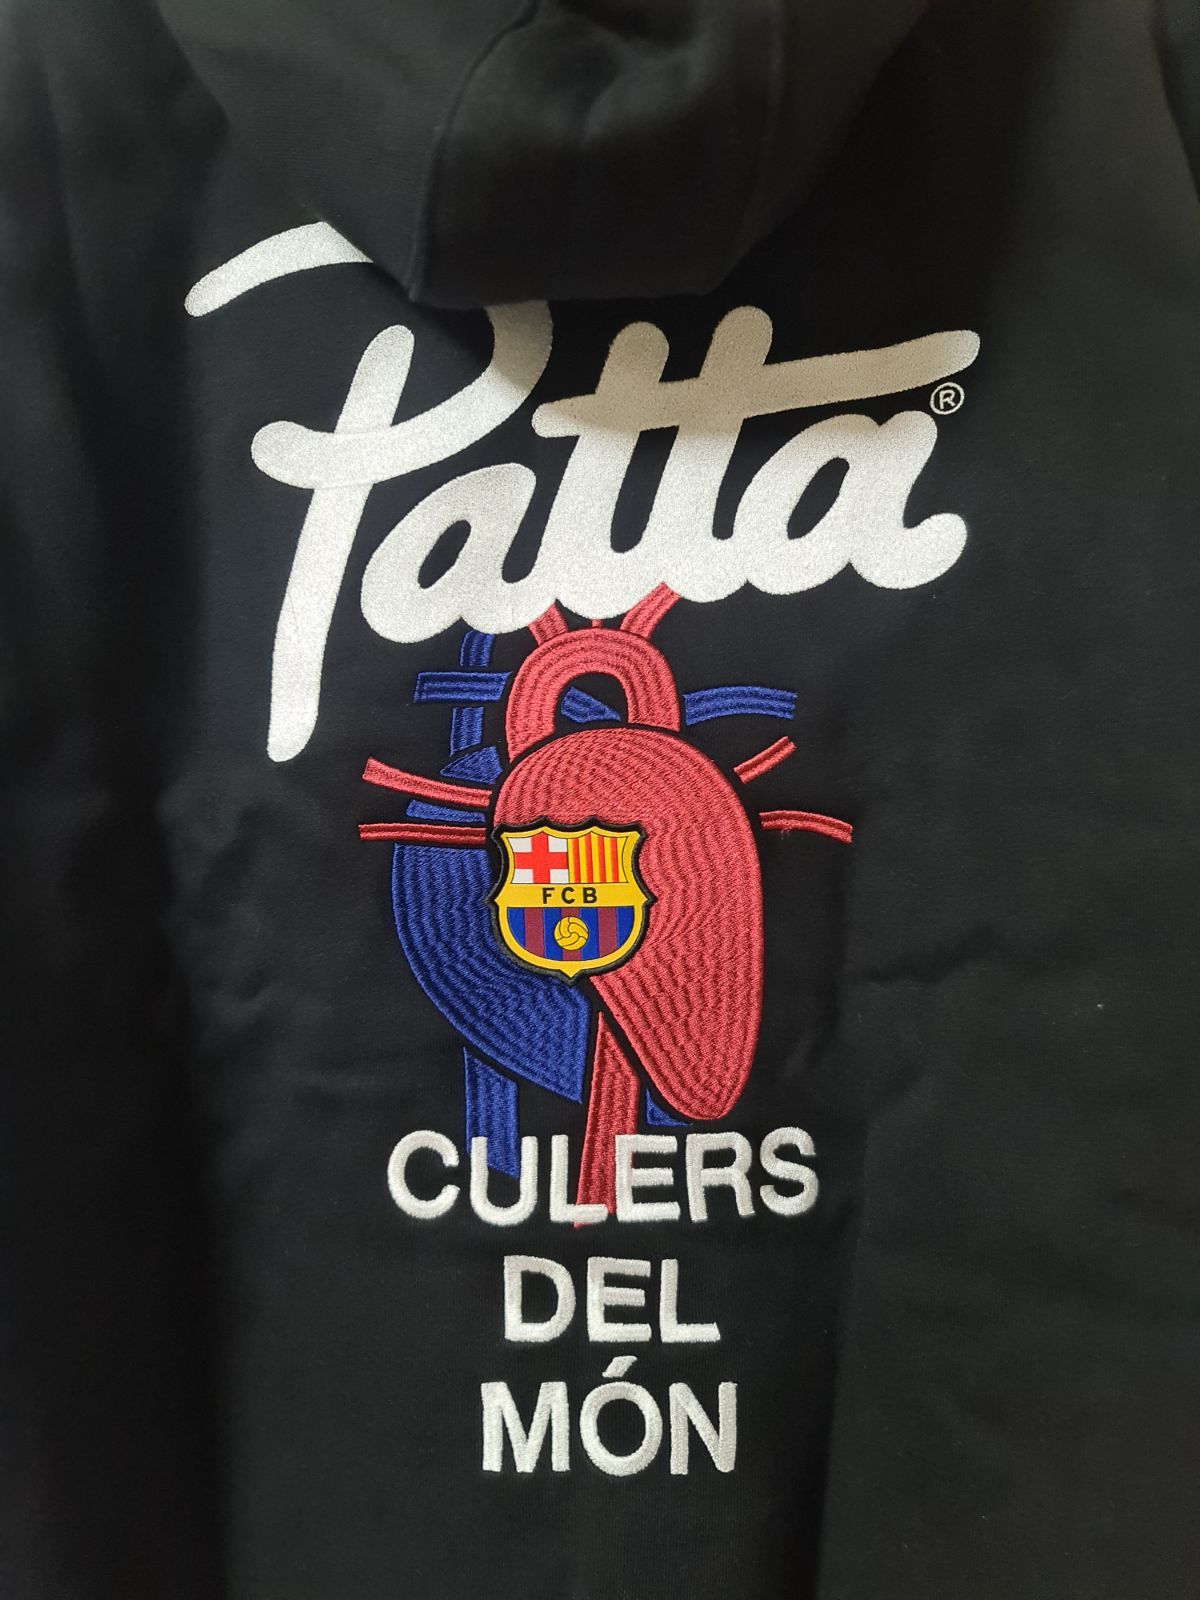 Nike FC Barcelona Patta Culers del Món パーカー ナイキ バルセロナ ...